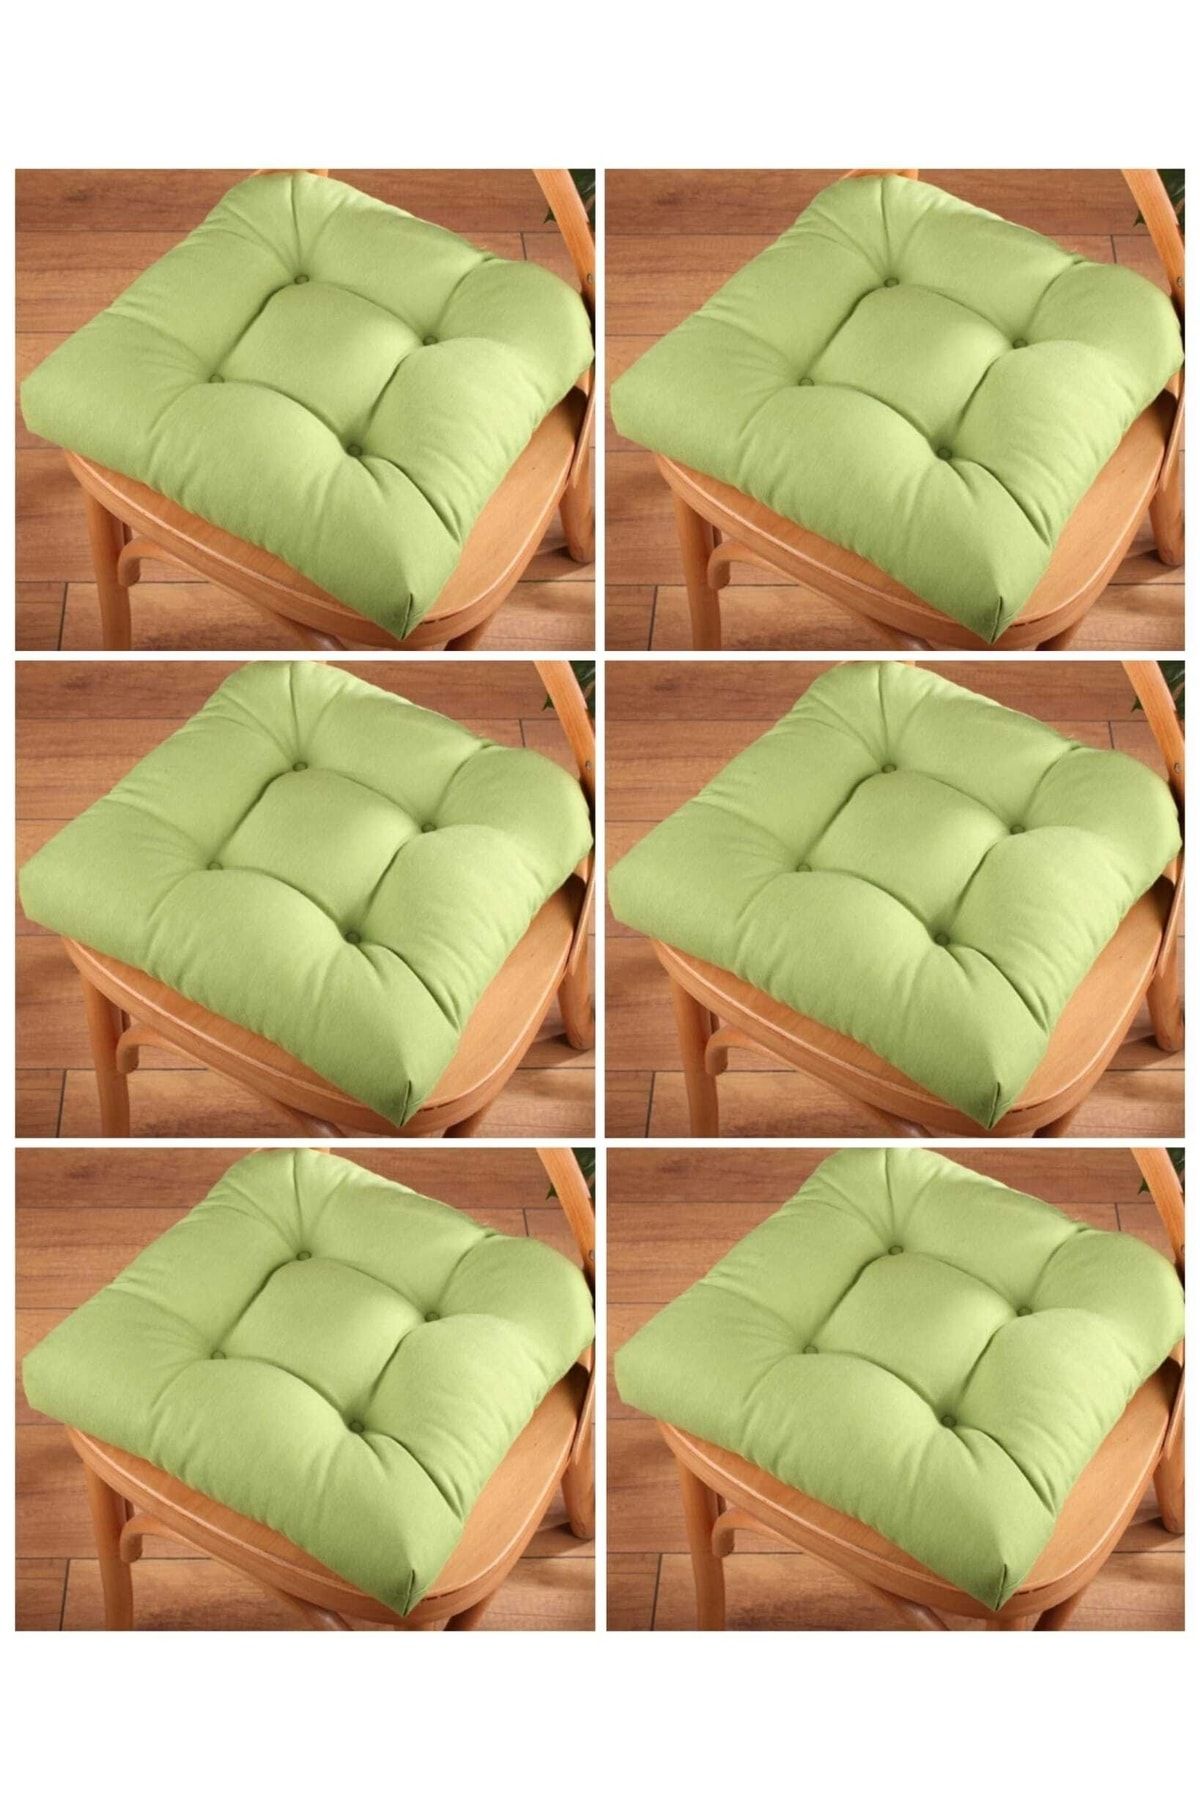 ALTINPAMUK 6'lı Gold Lüx Pofidik Sandalye Minderi Özel Dikişli 40x40cm Yeşil